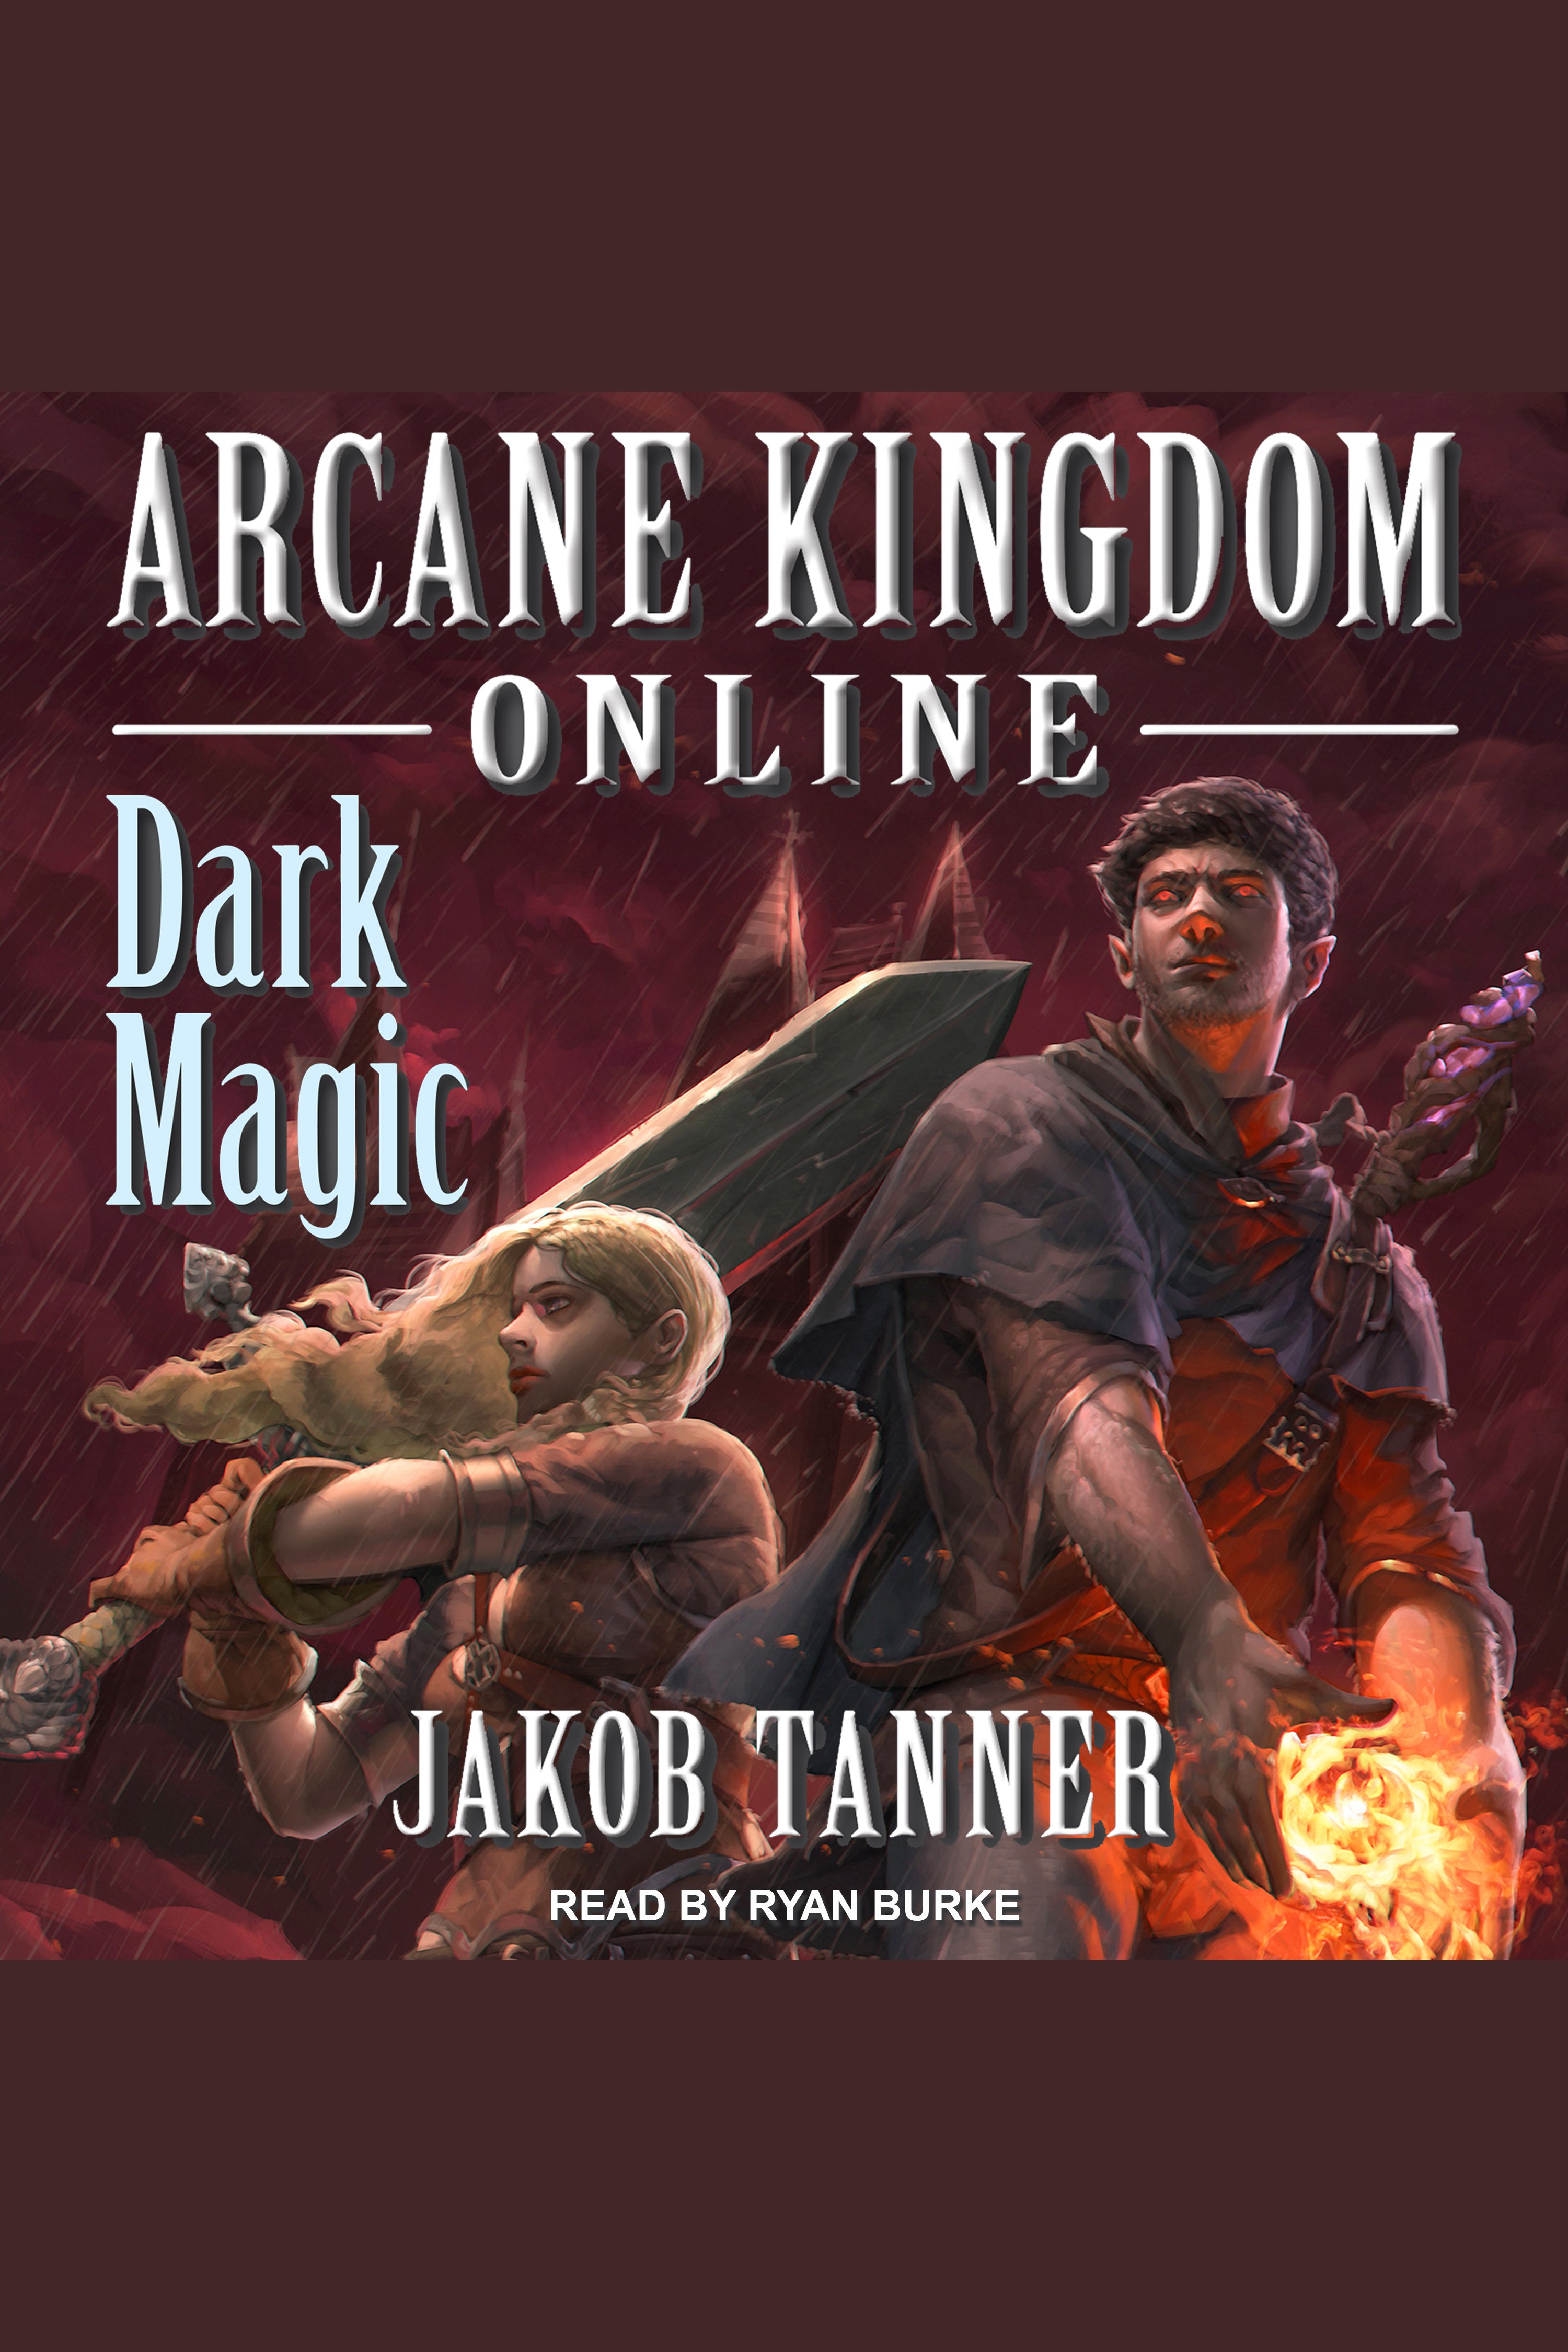 Arcane Kingdom online cover image